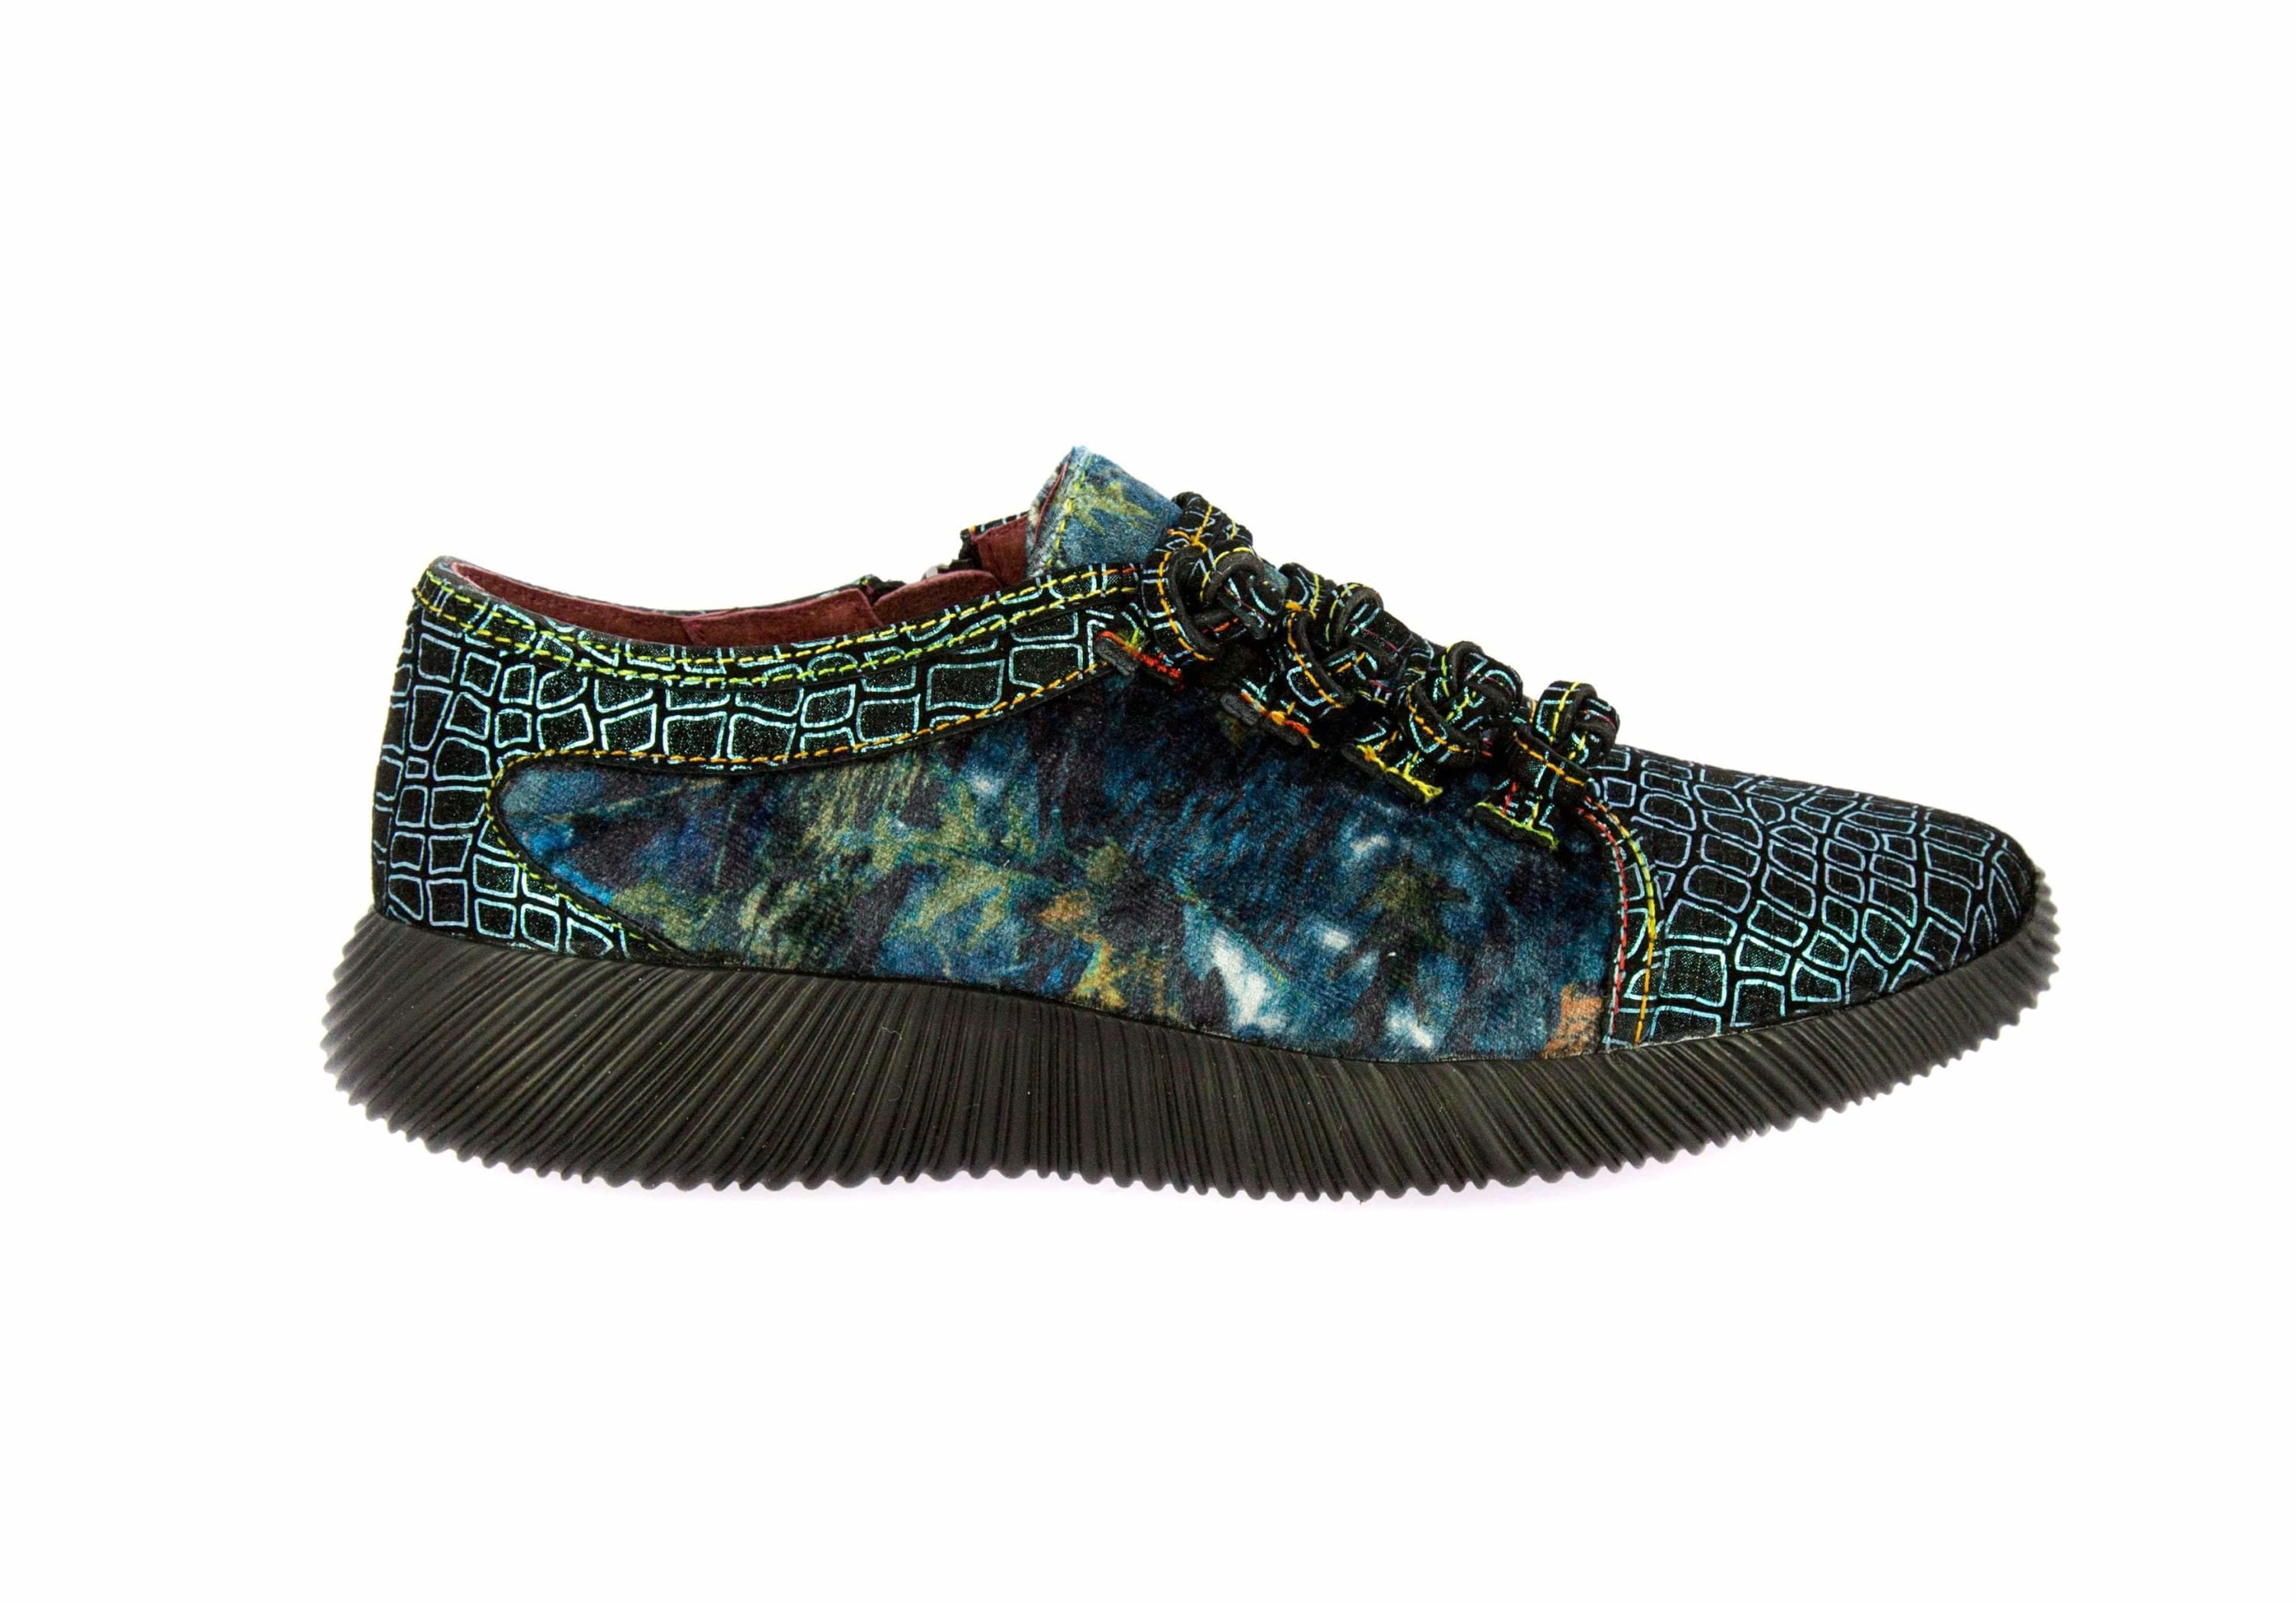 Chaussure DELPHINE 23 - 35 / BLUE - Sneaker